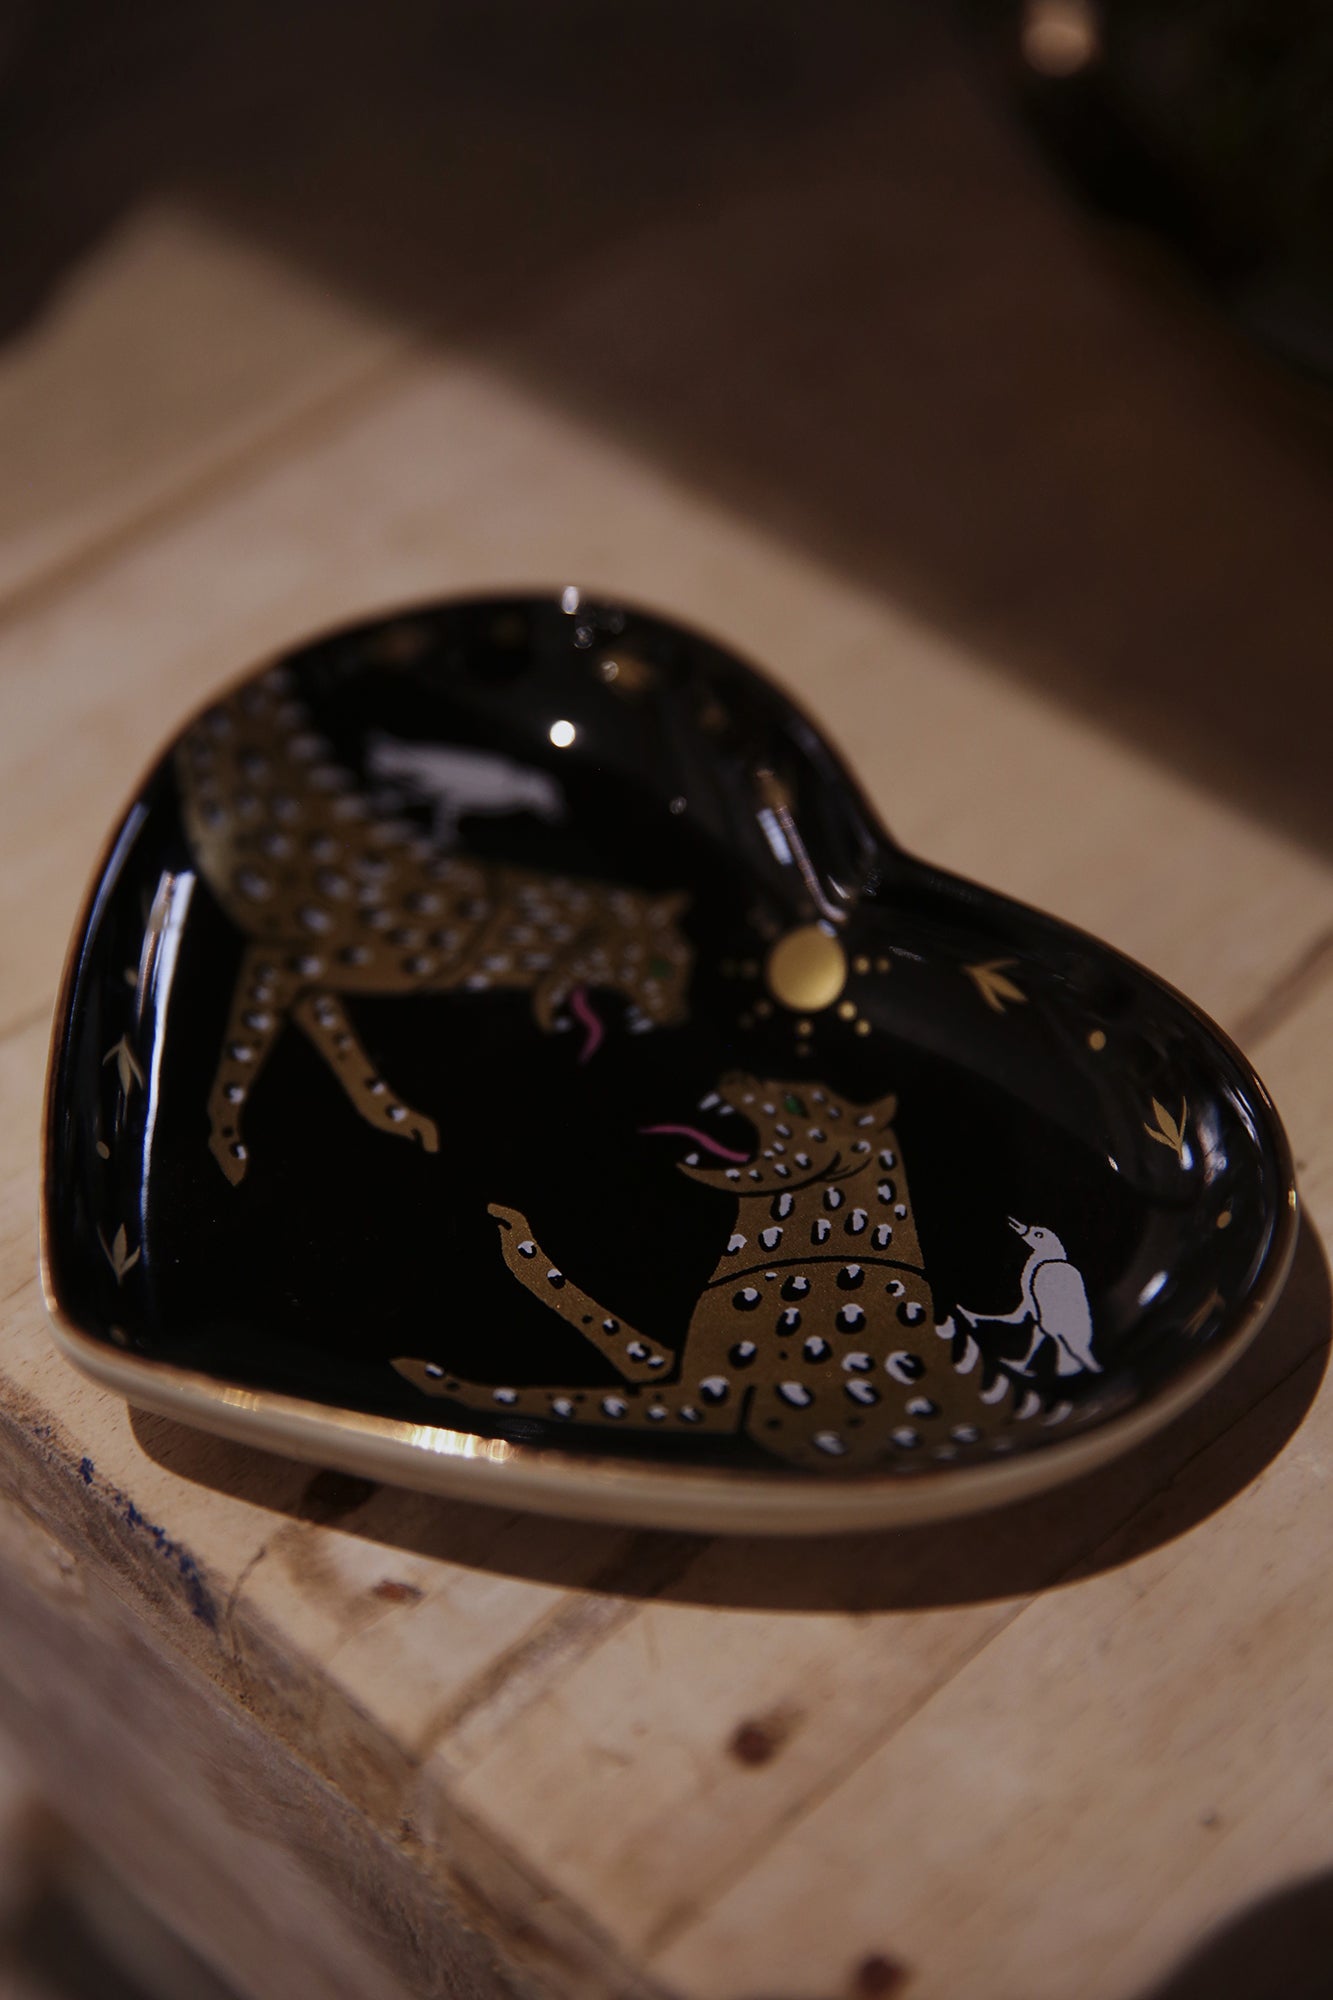 Two Cheetahs Ceramic Heart Dish